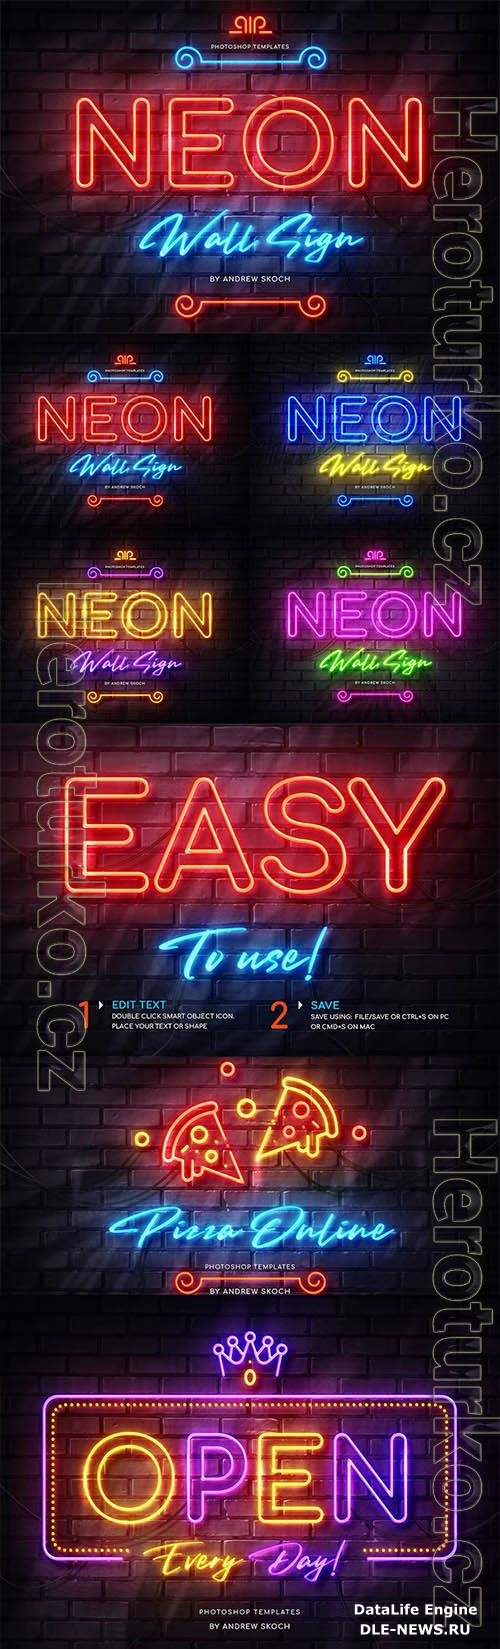 Neon Wall Sign Creator PSD